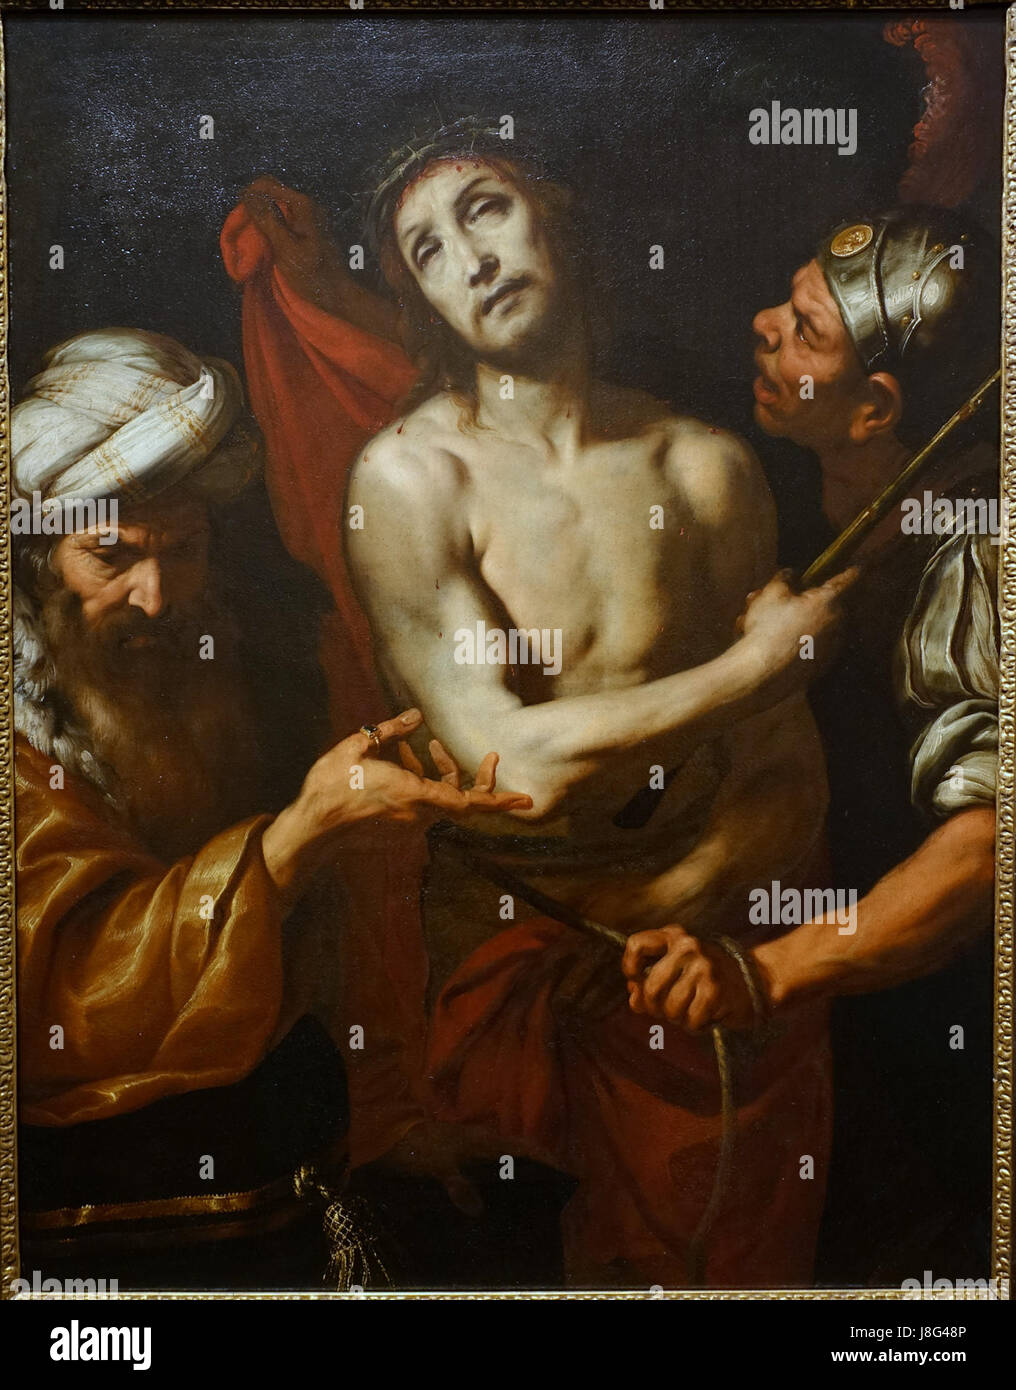 Ecce Homo by Daniele Crespi, Milan, c. 1623, oil on canvas   Blanton Museum of Art   Austin, Texas   DSC07958 Stock Photo